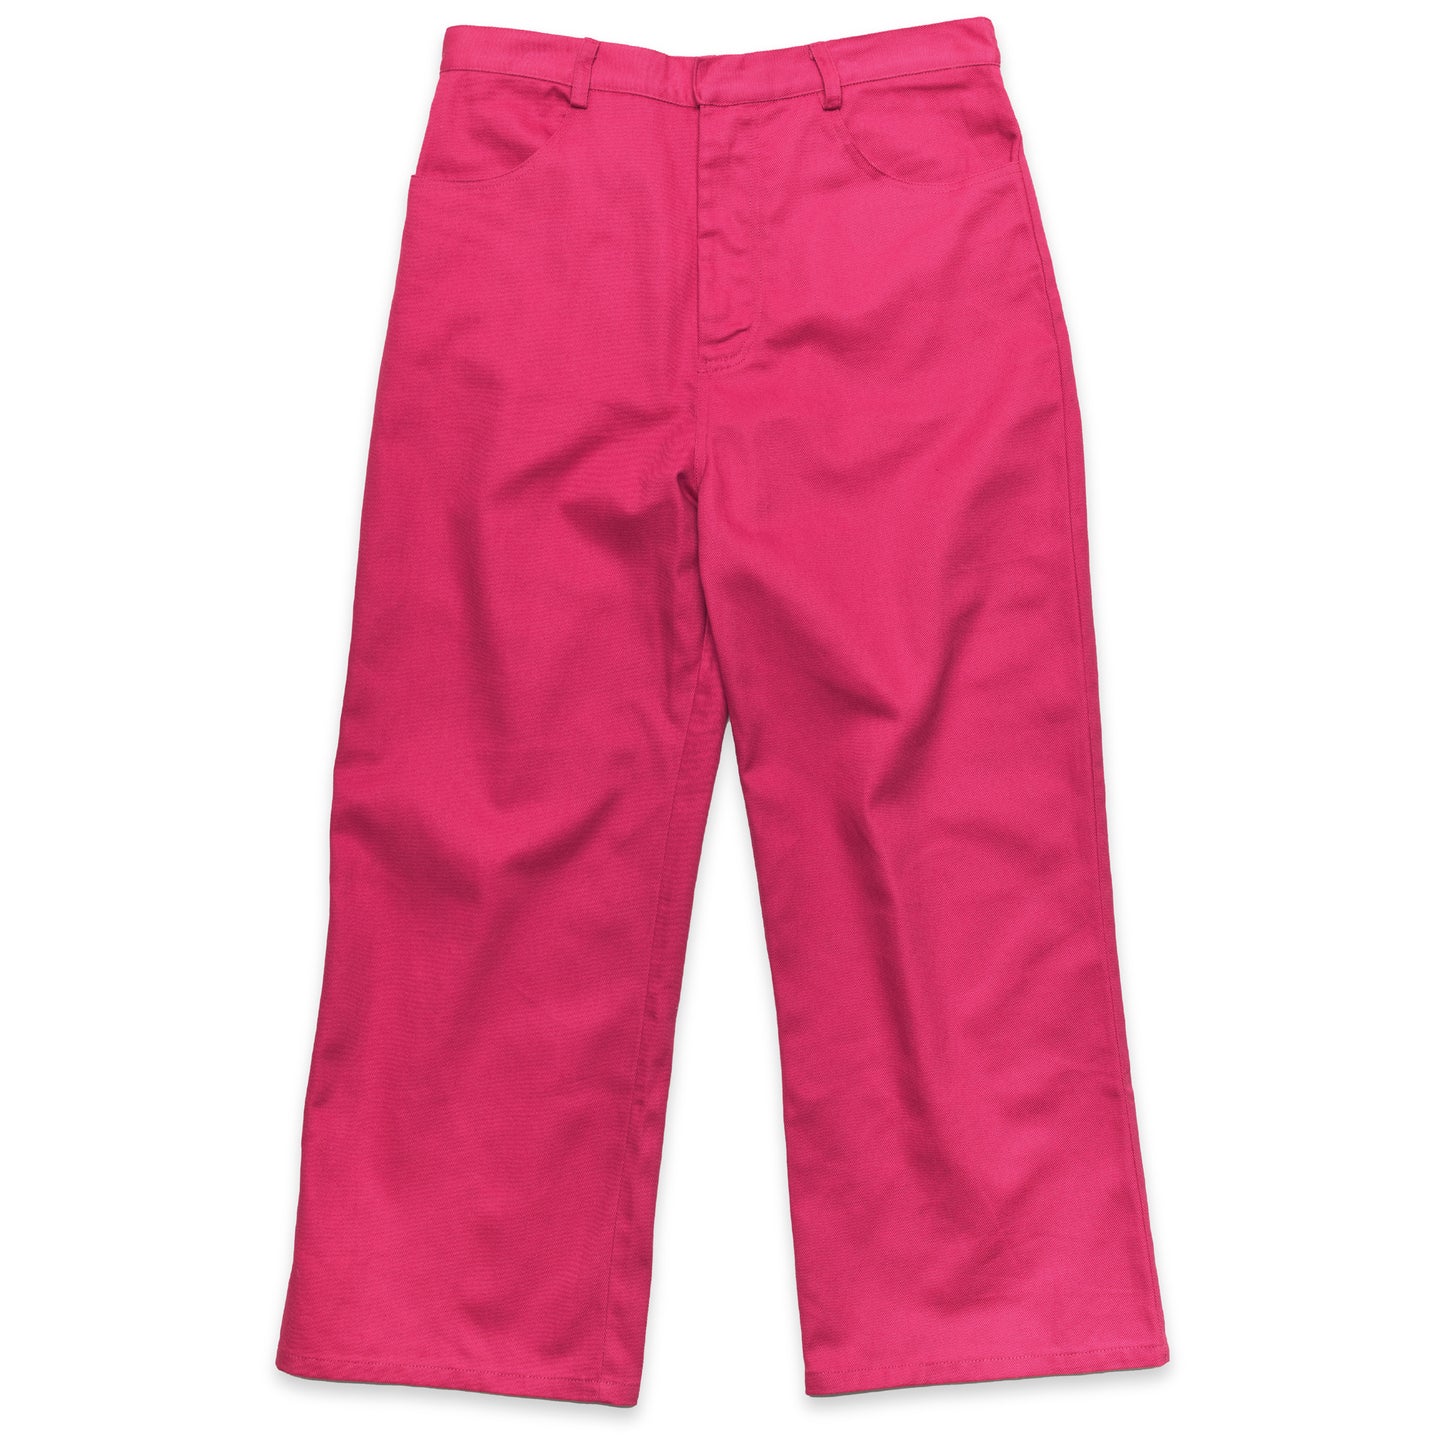 Booker Pants - Hot Pink